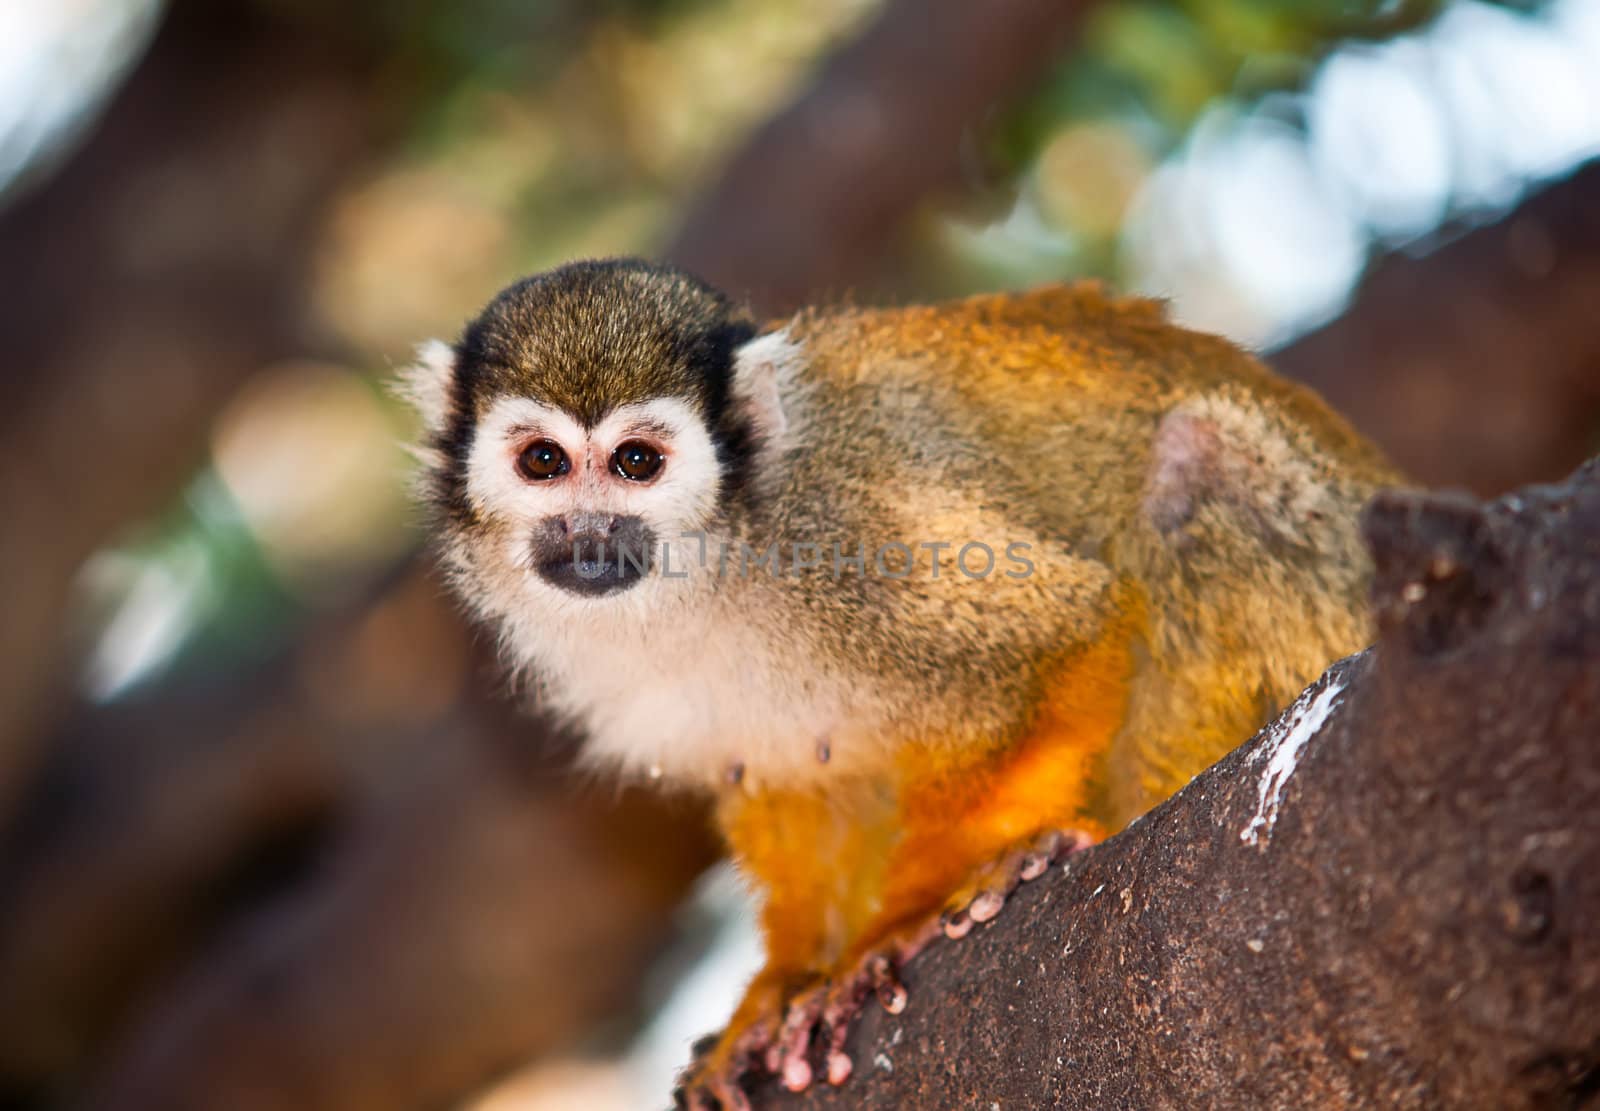 Squirrel monkey in a branch in Israel .